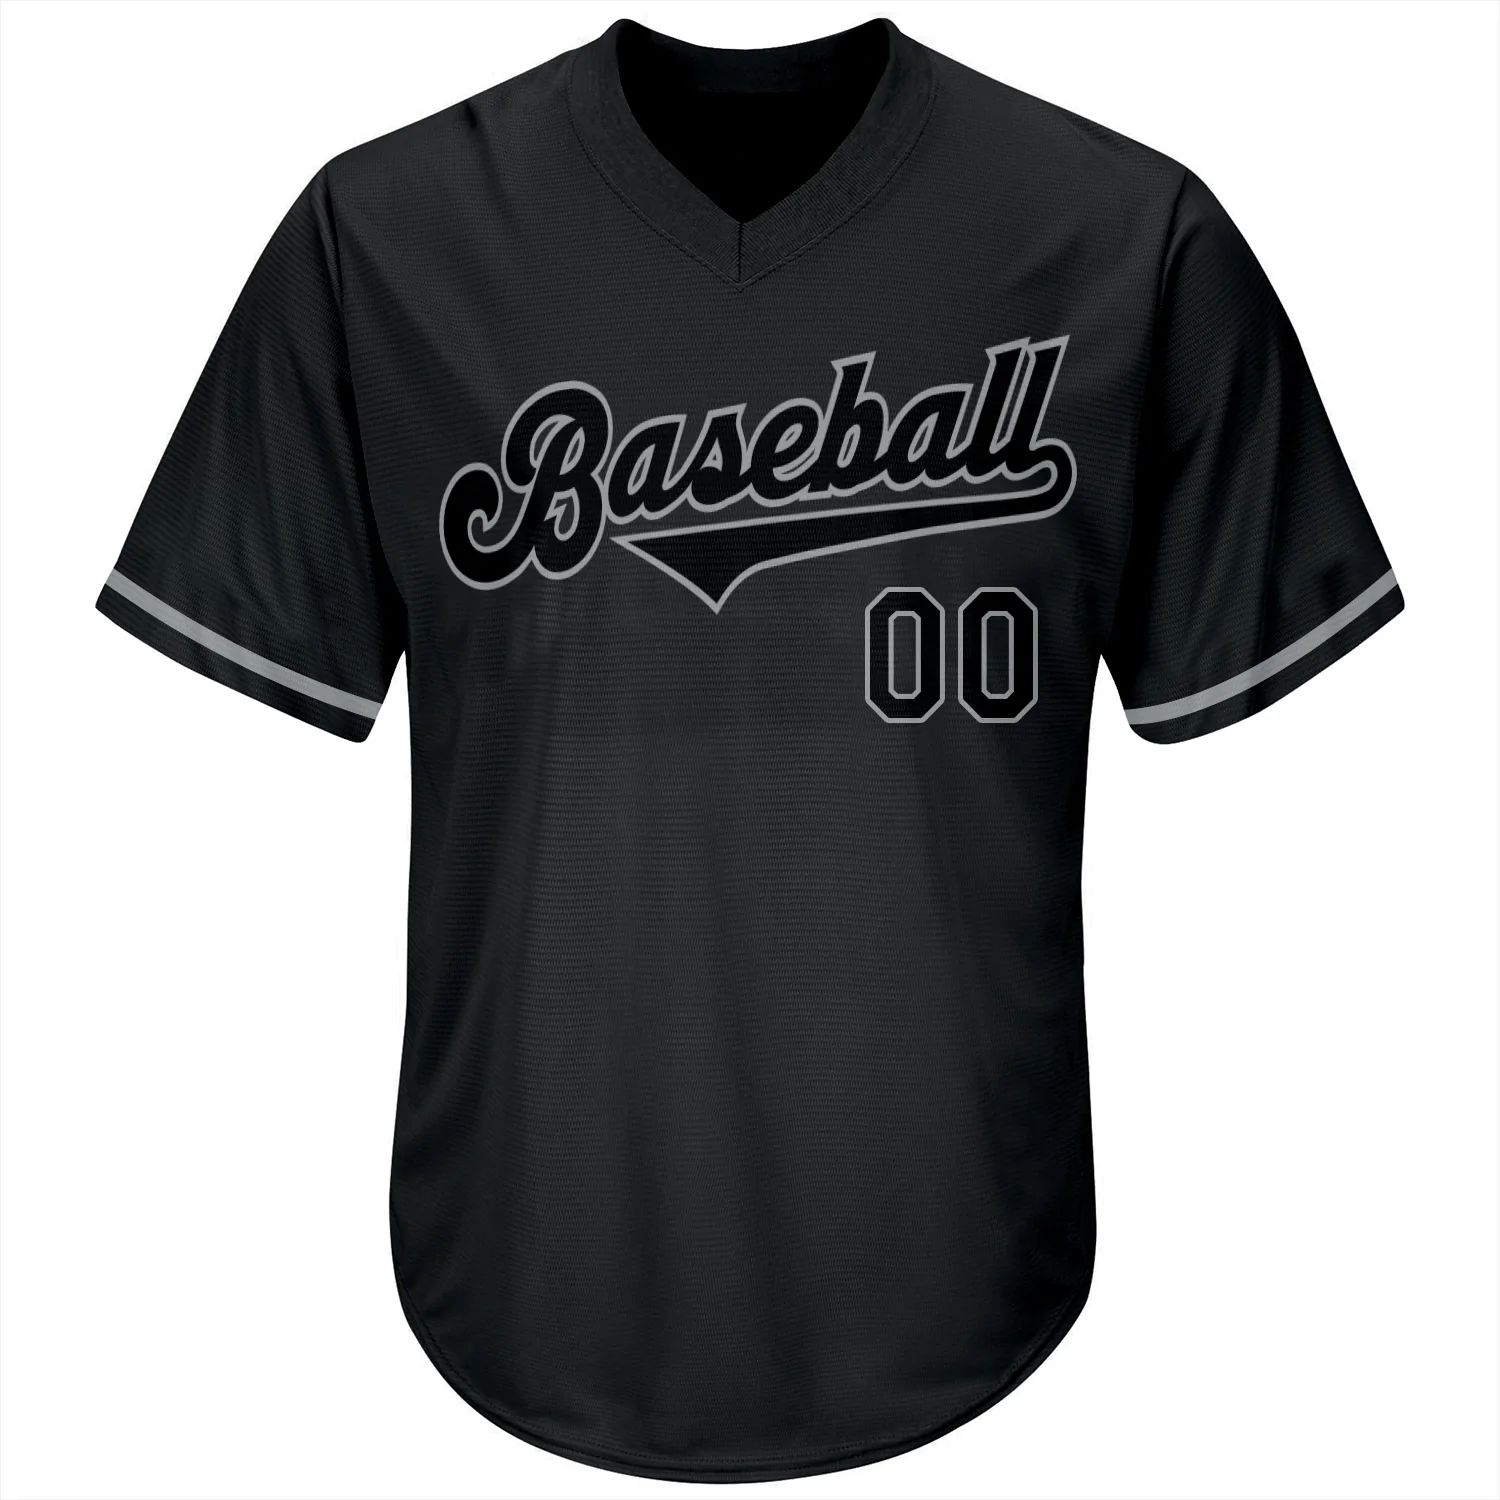 build-gray-black-baseball-black-jersey-authentic-throwback-eblack00976-online-2.jpg